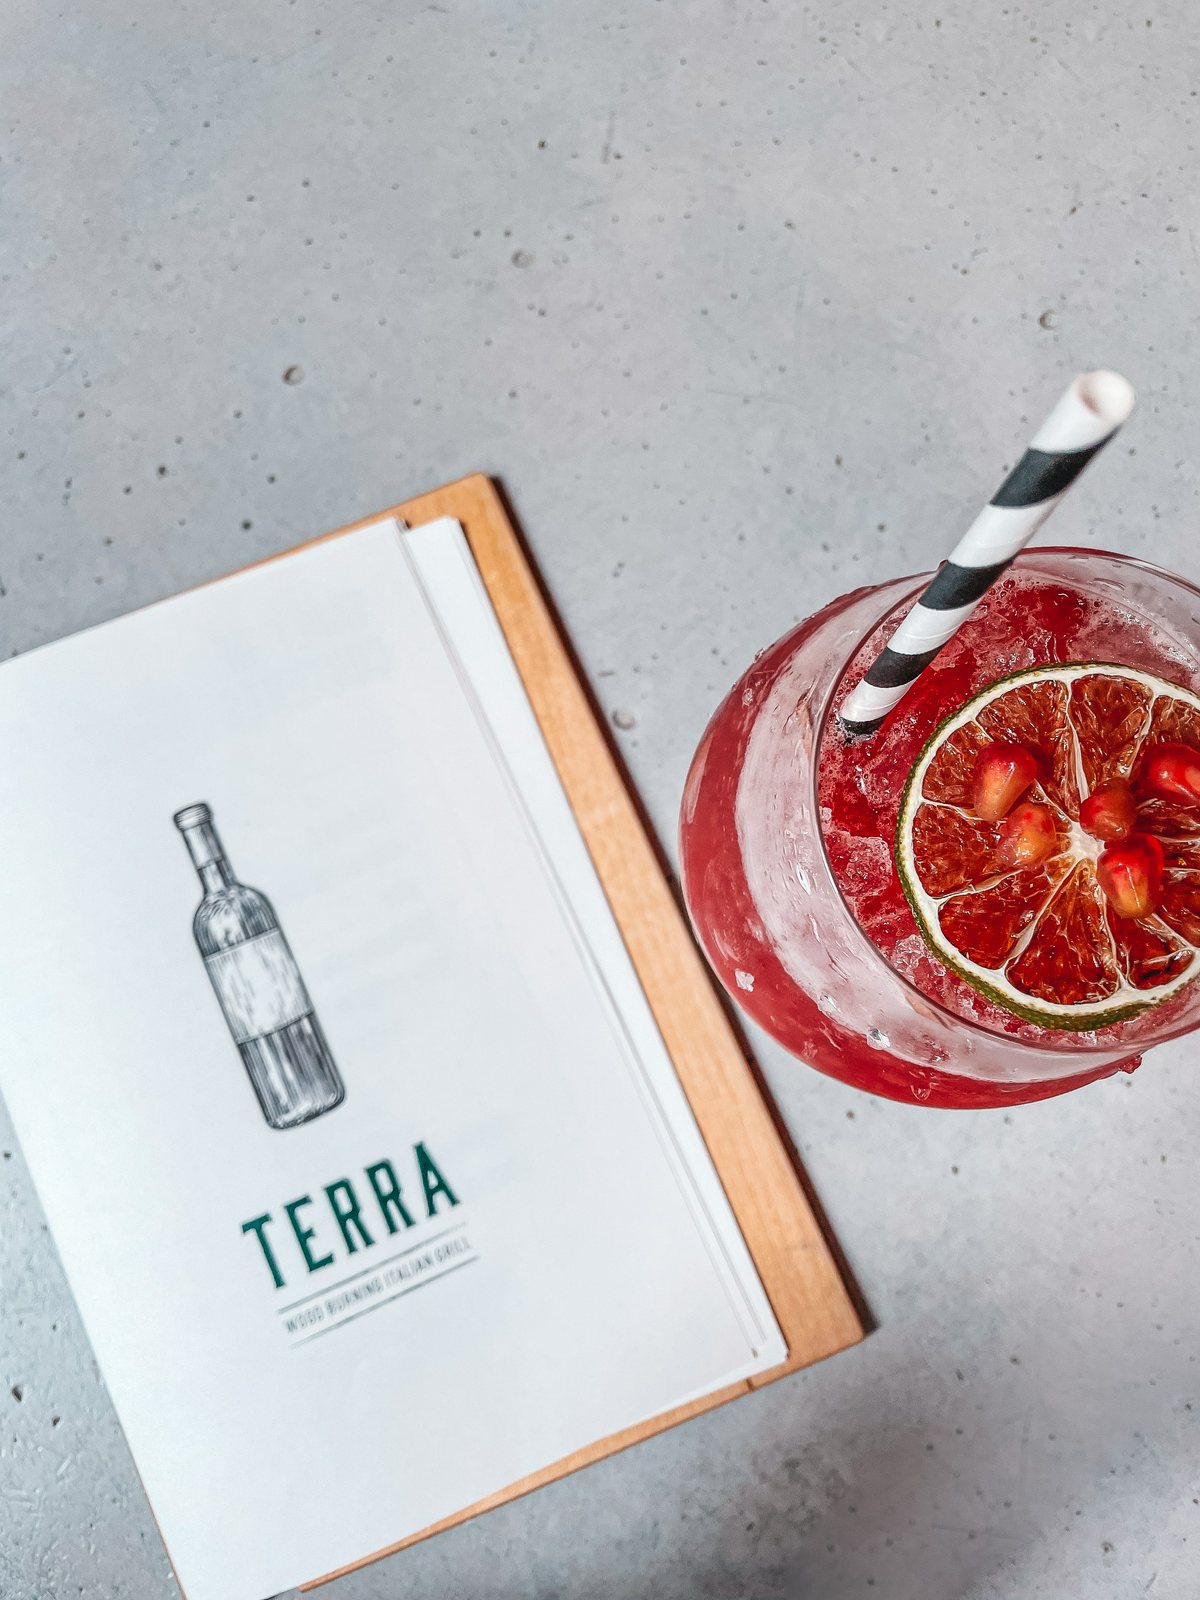 Terra Eataly Boston cocktail and menu